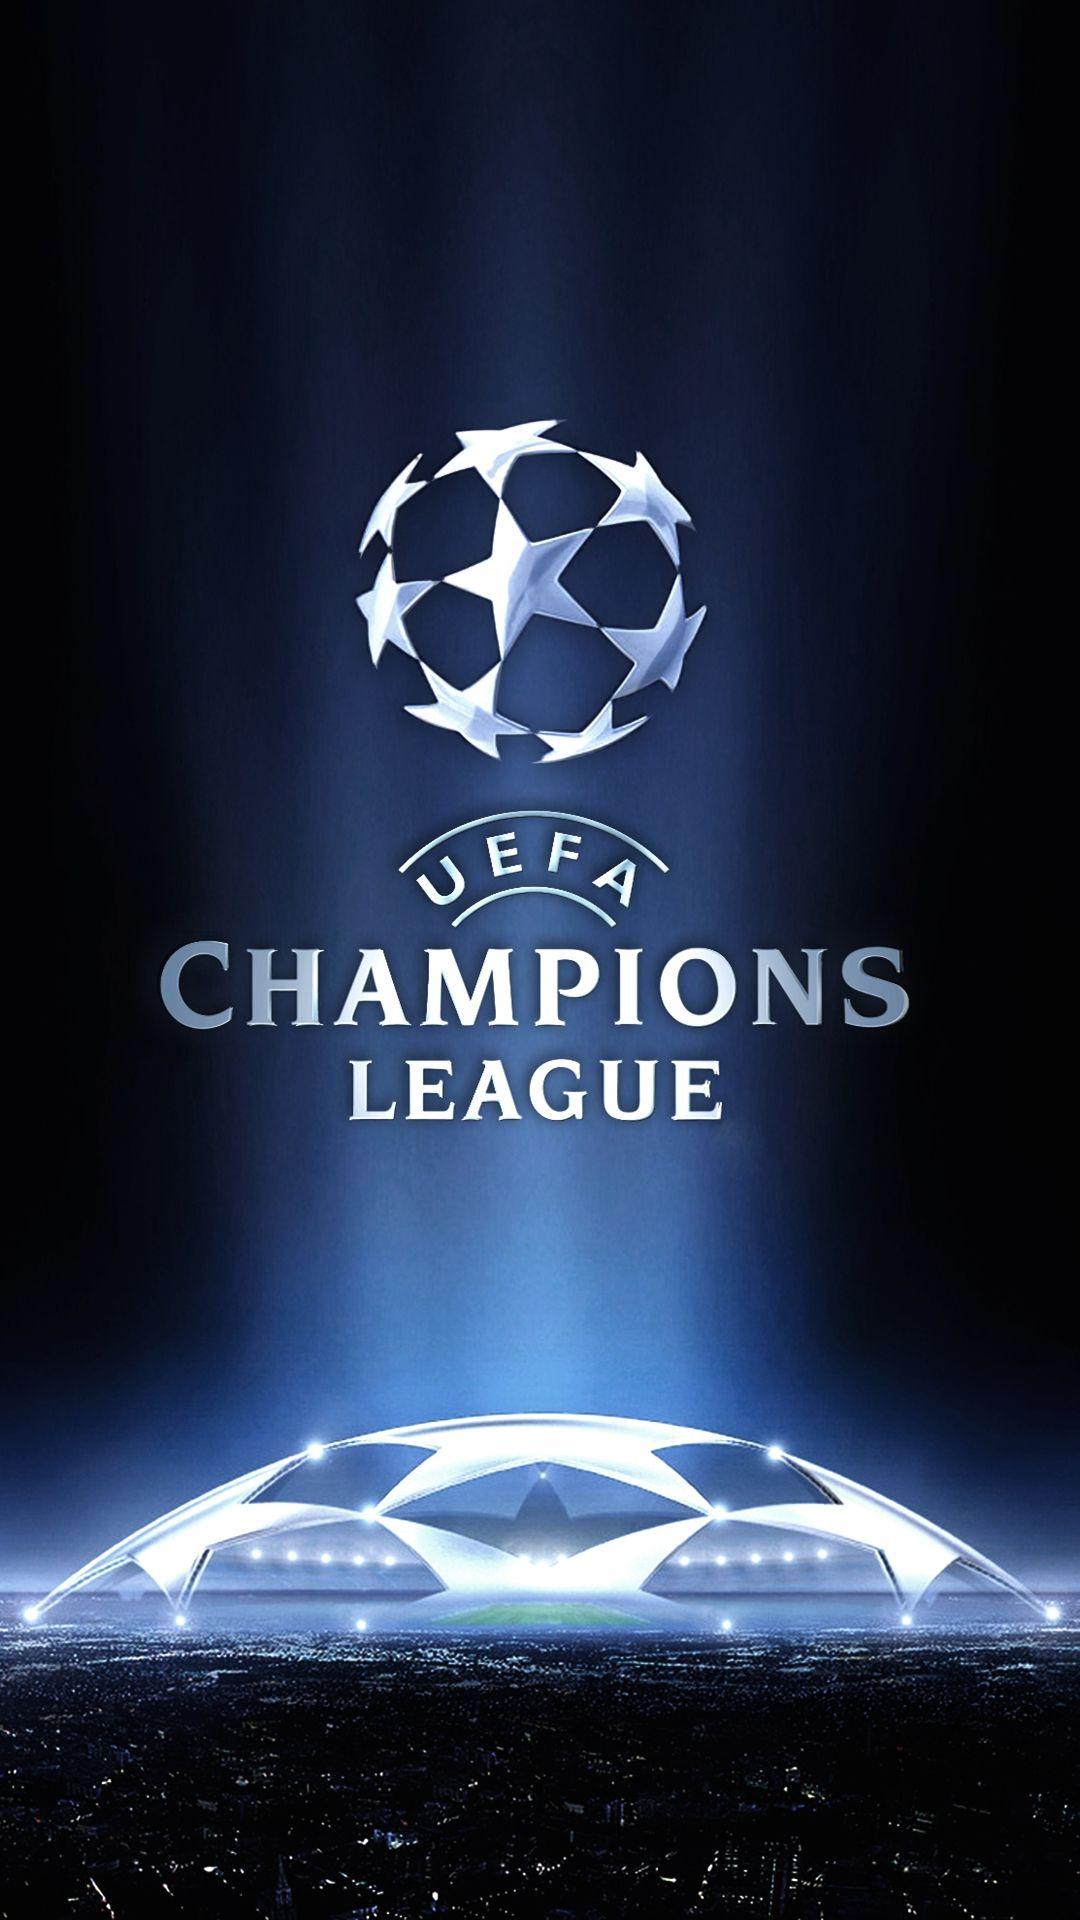 best ideas about Champions league. Champions